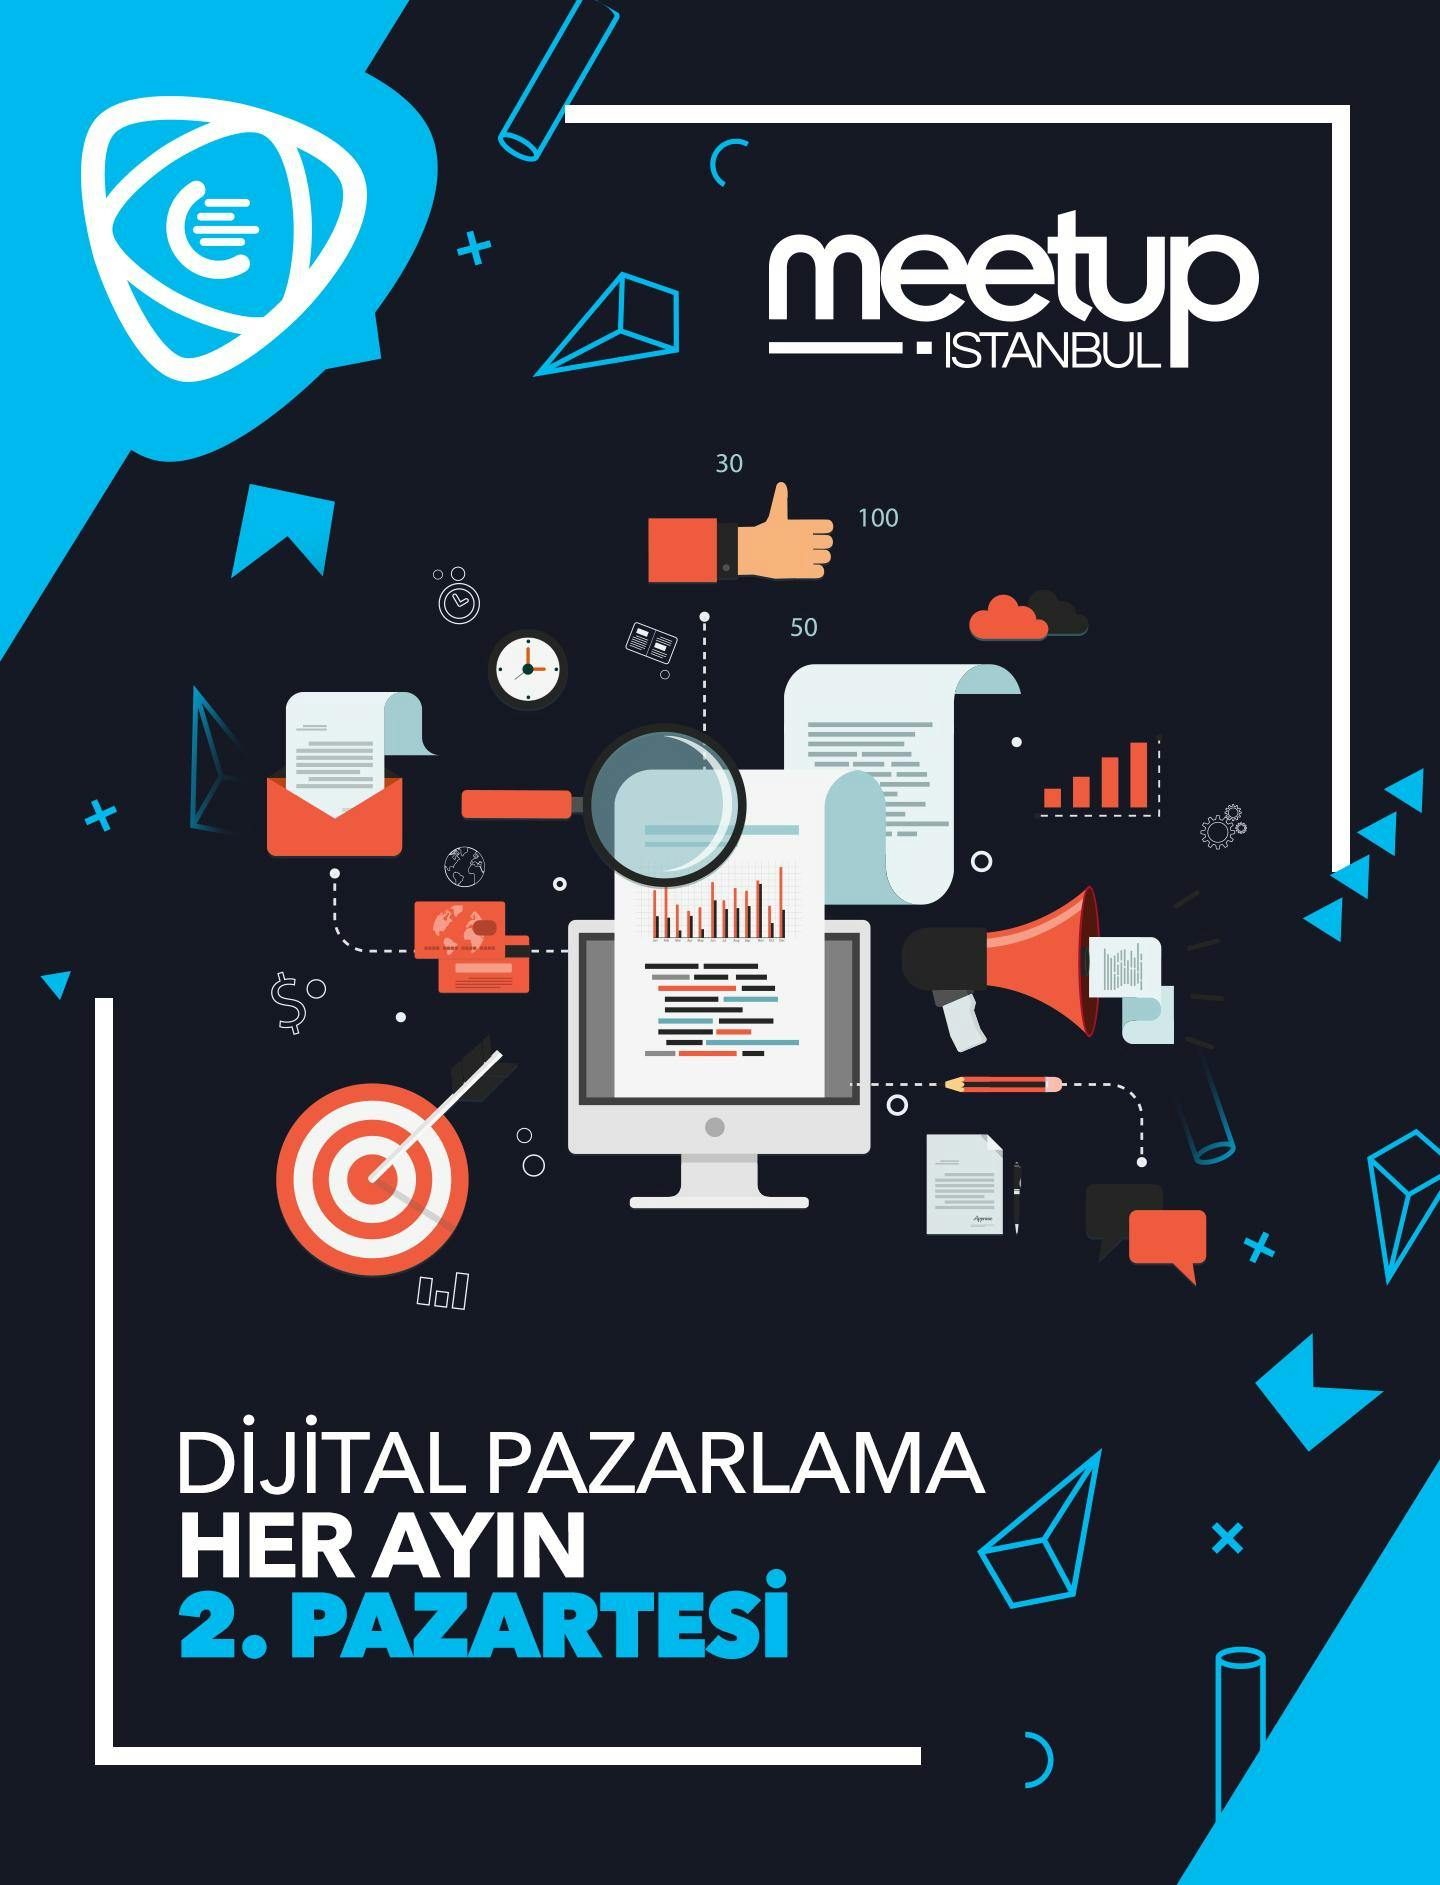 Dijital Pazarlama - Meetup İstanbul